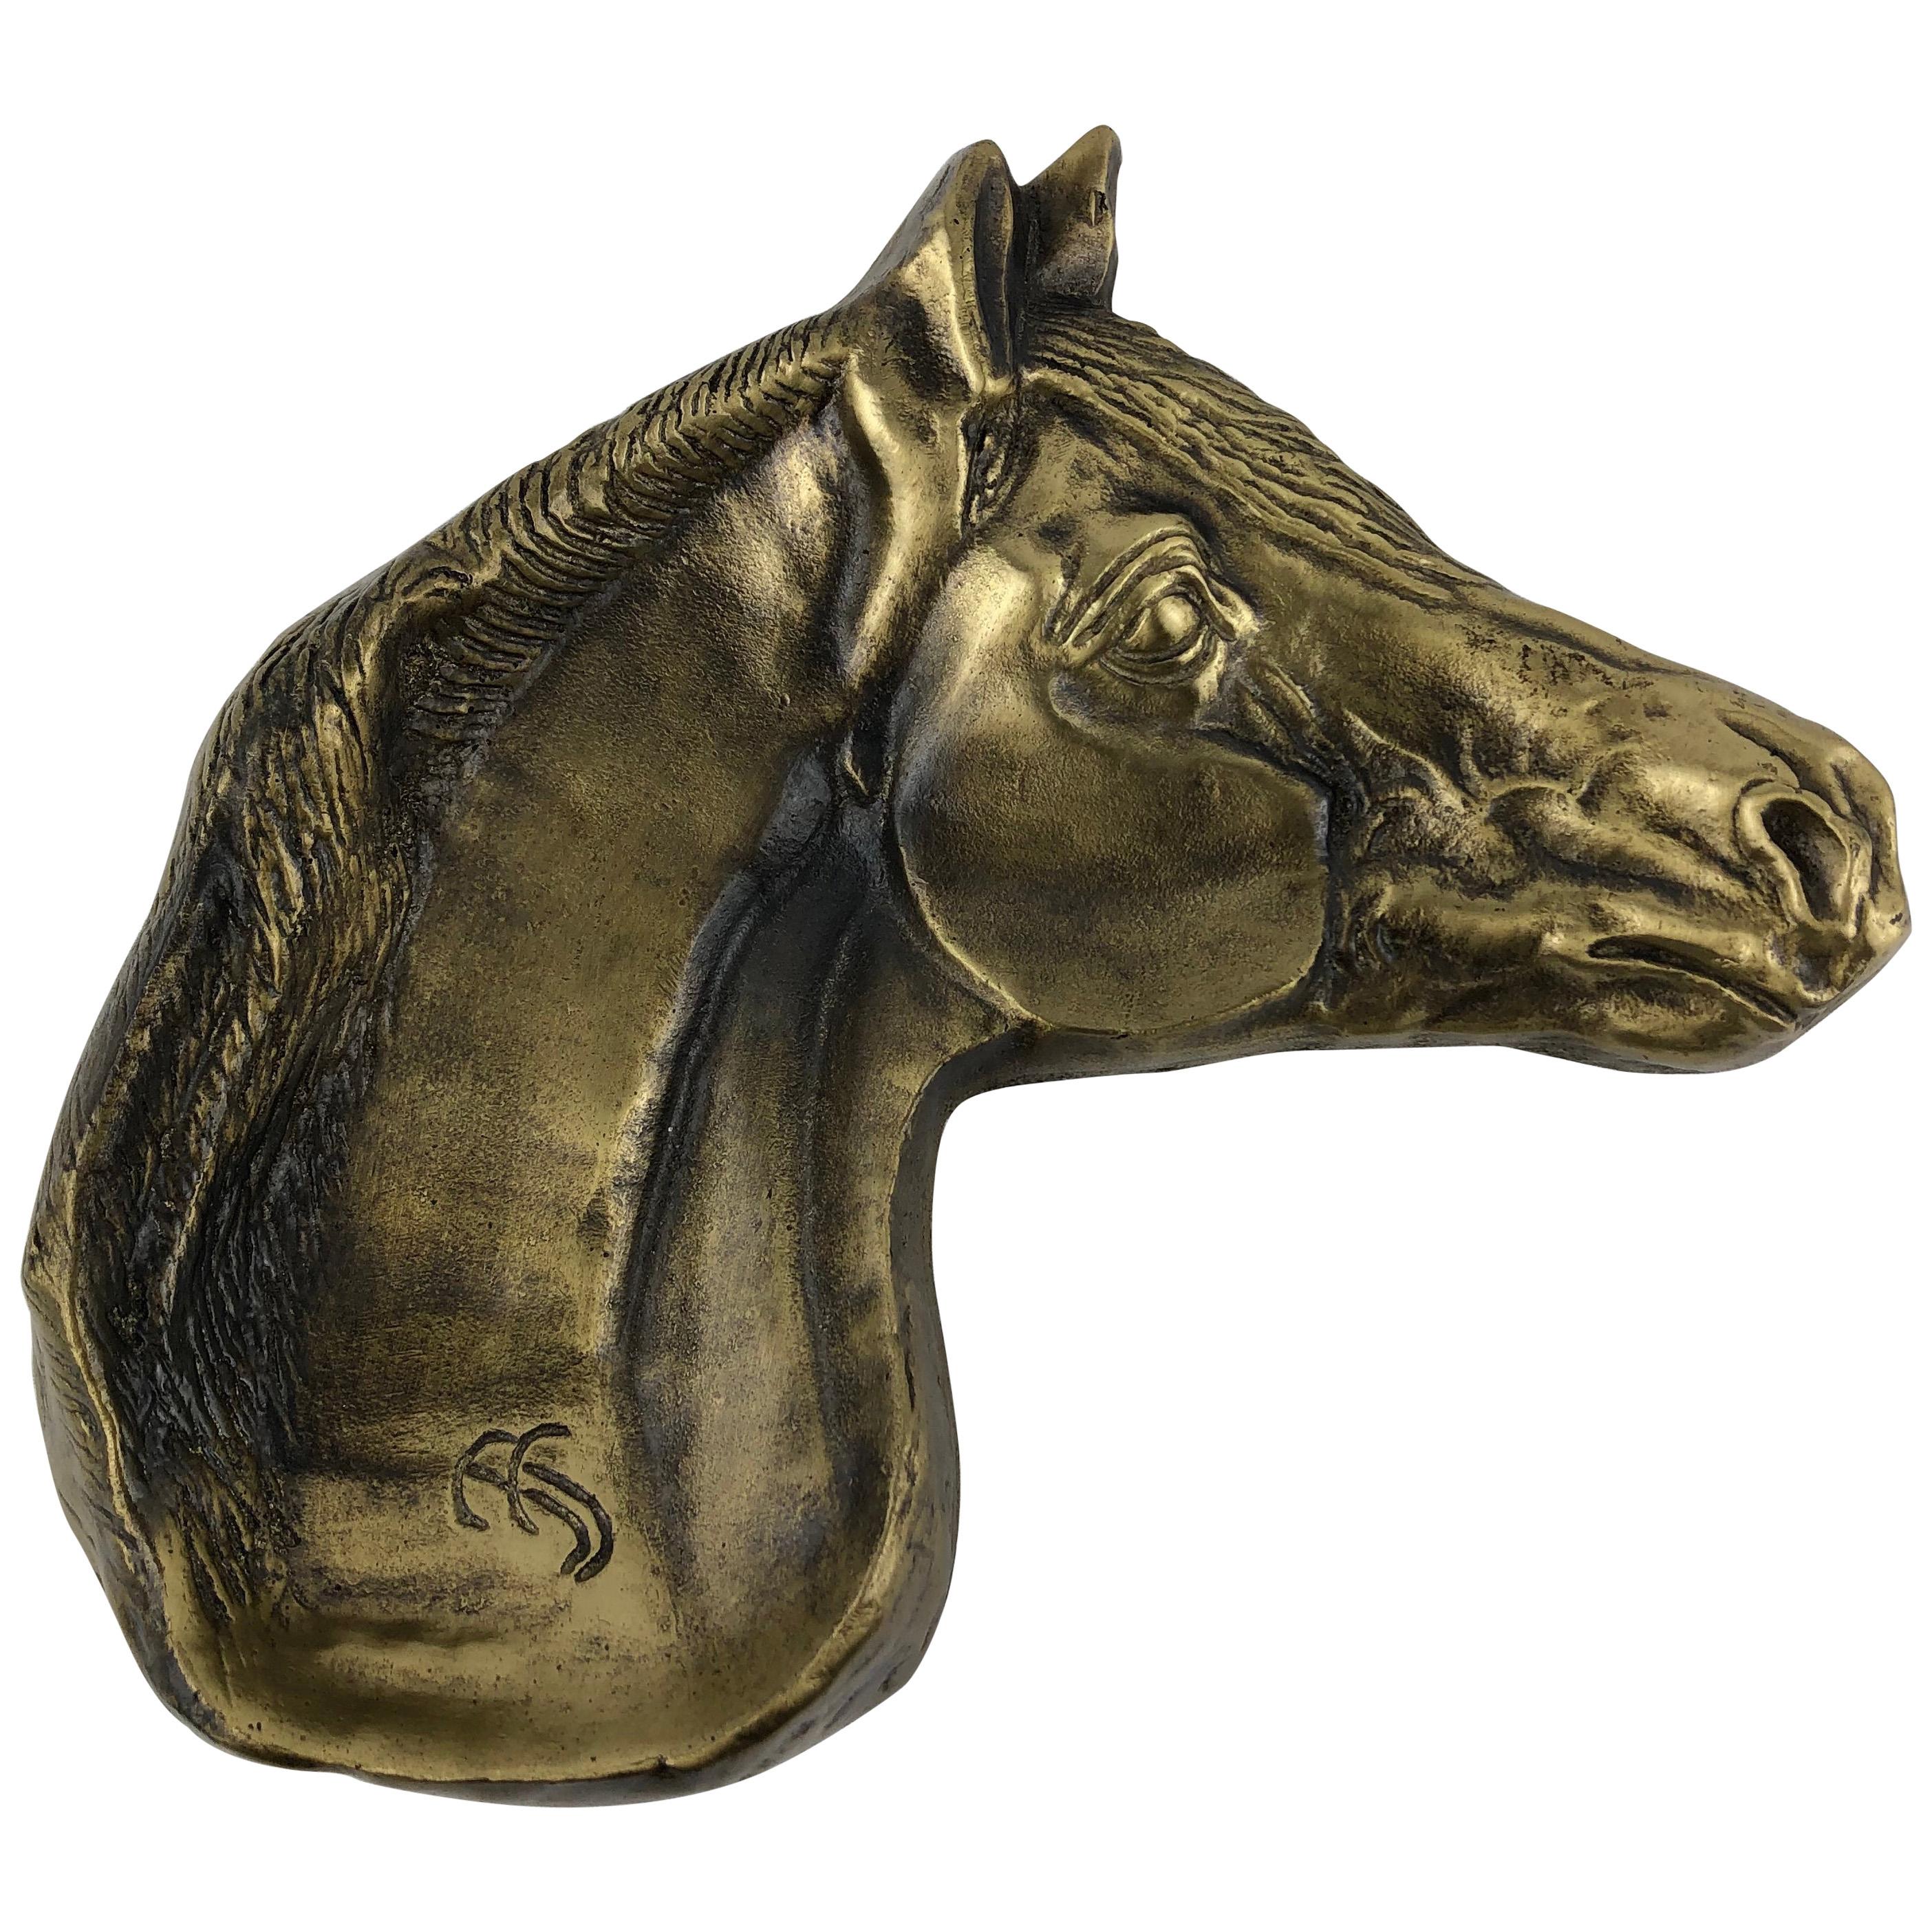 Sculpted Bronze Horse Head Key Holder or Vide Poche, Signed